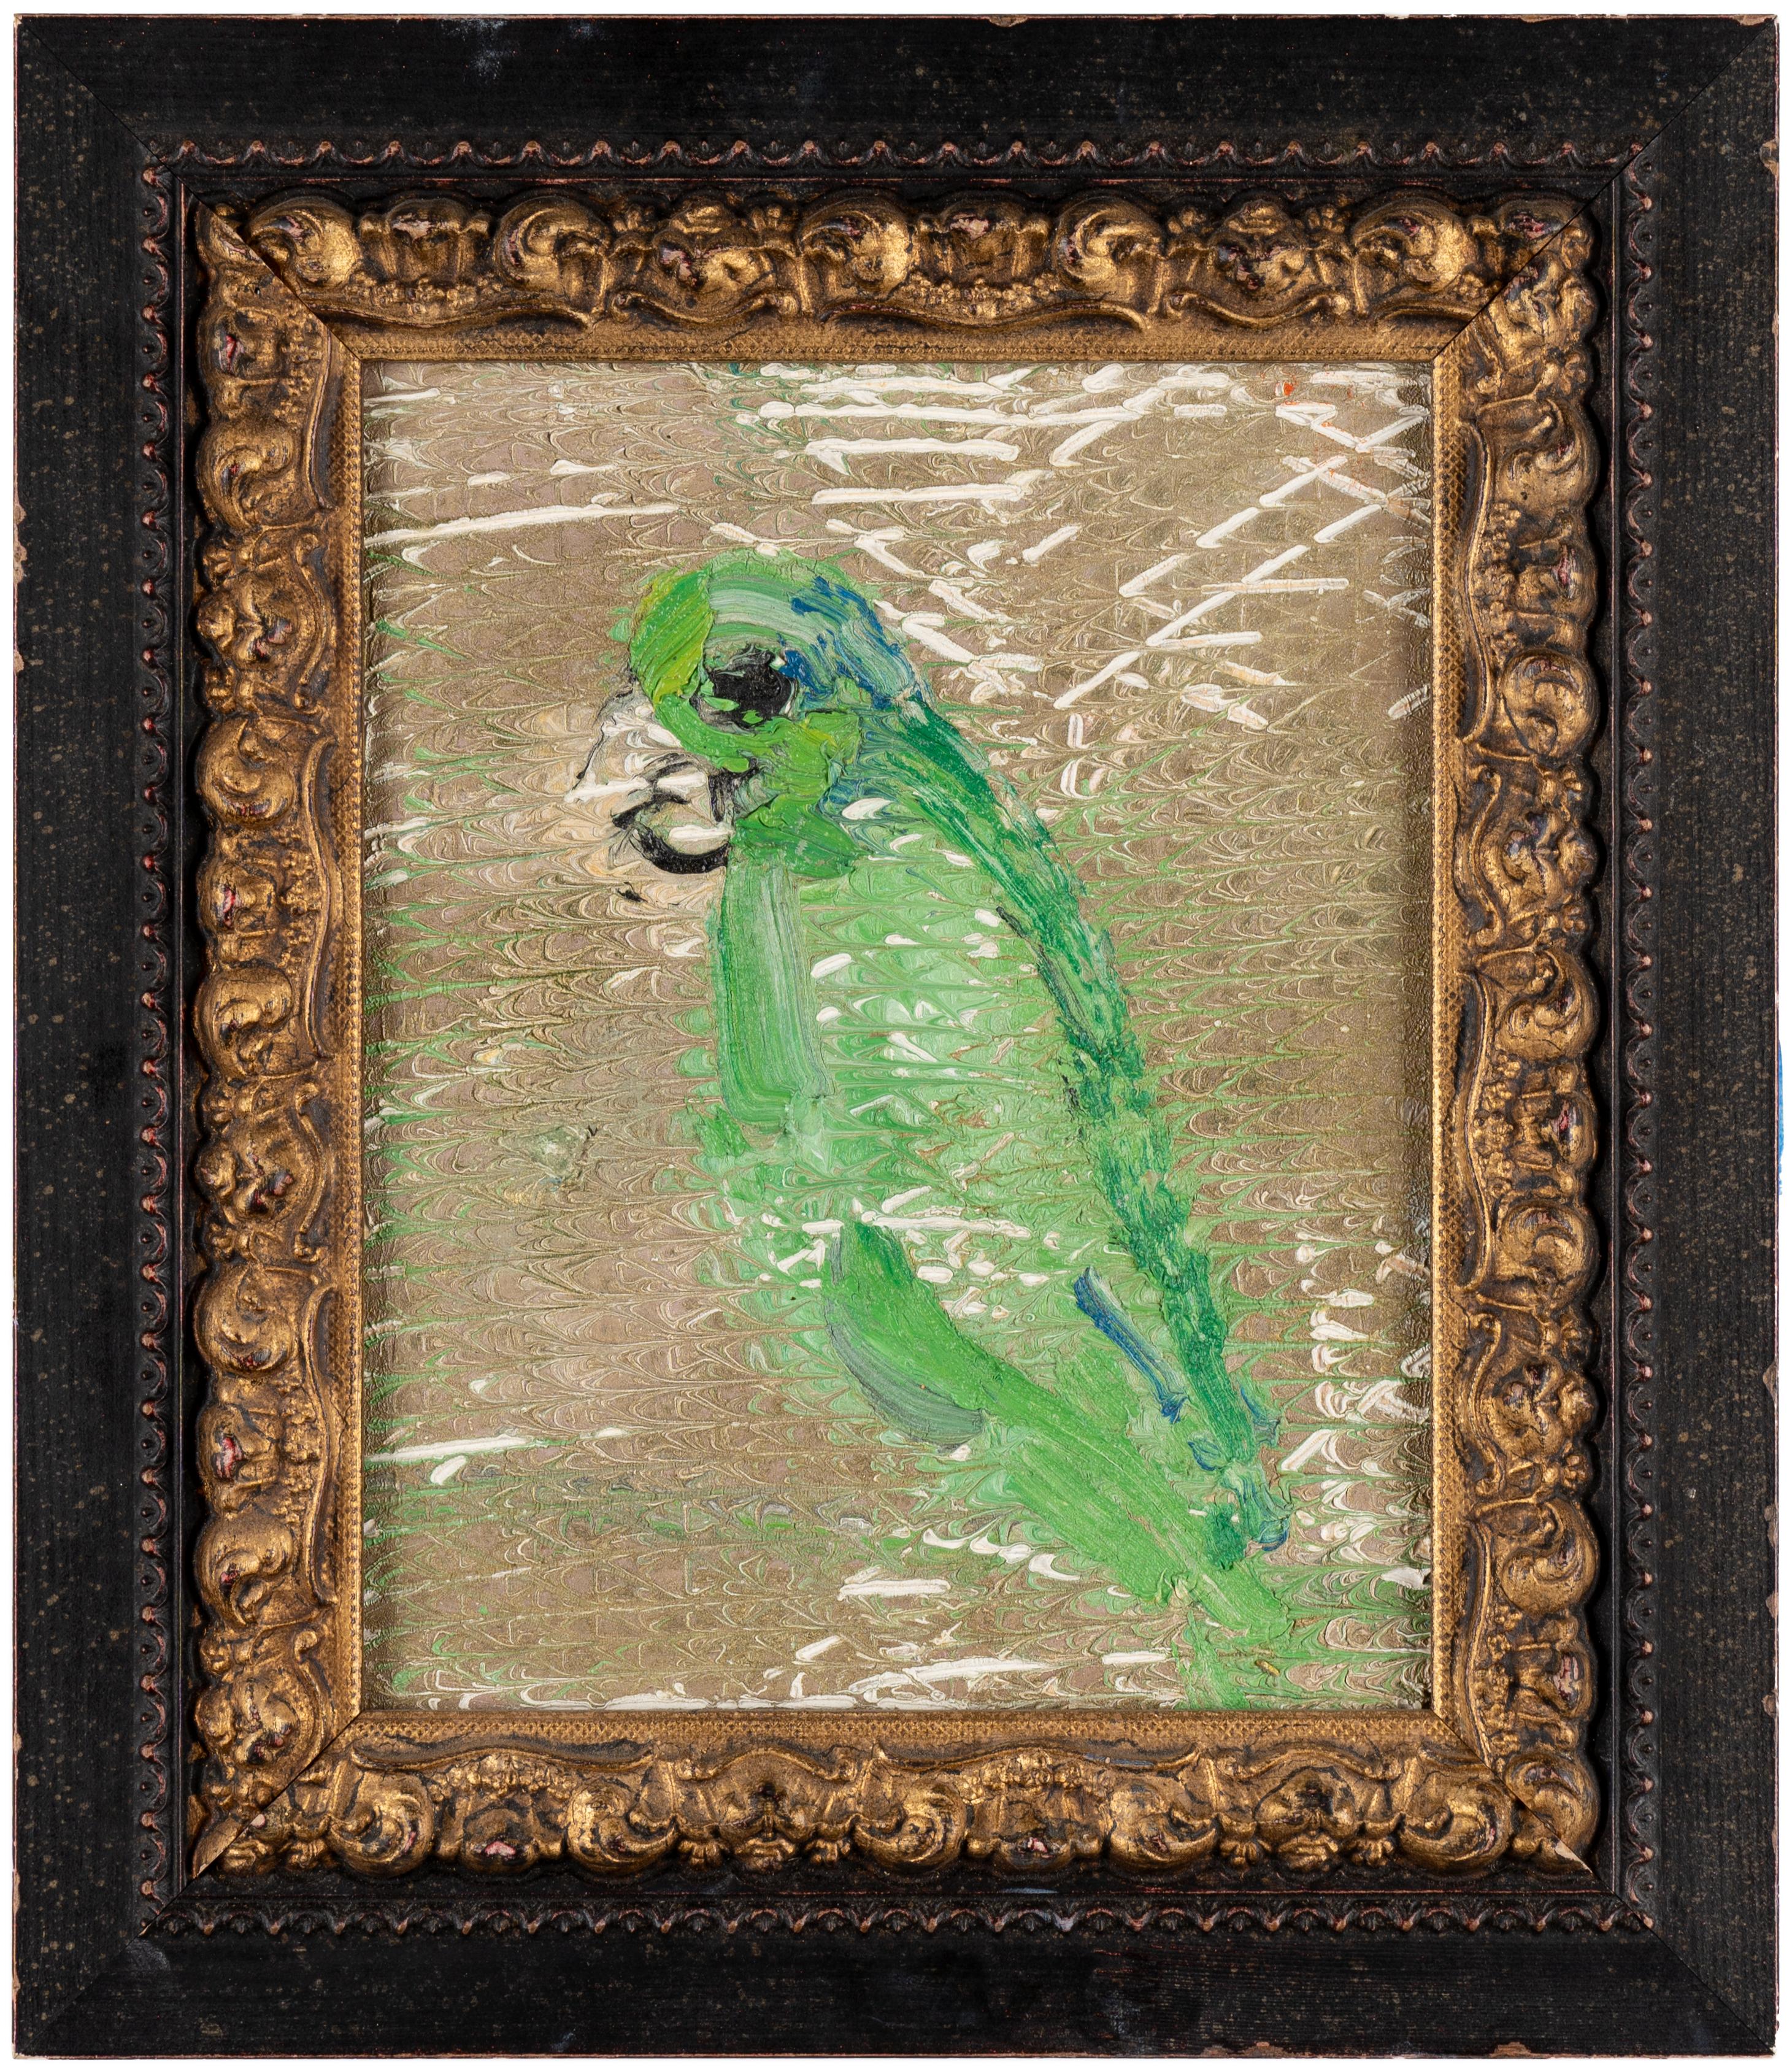 Classic Hunt Slonem "Untitled" Green Amazon Bird on Gold